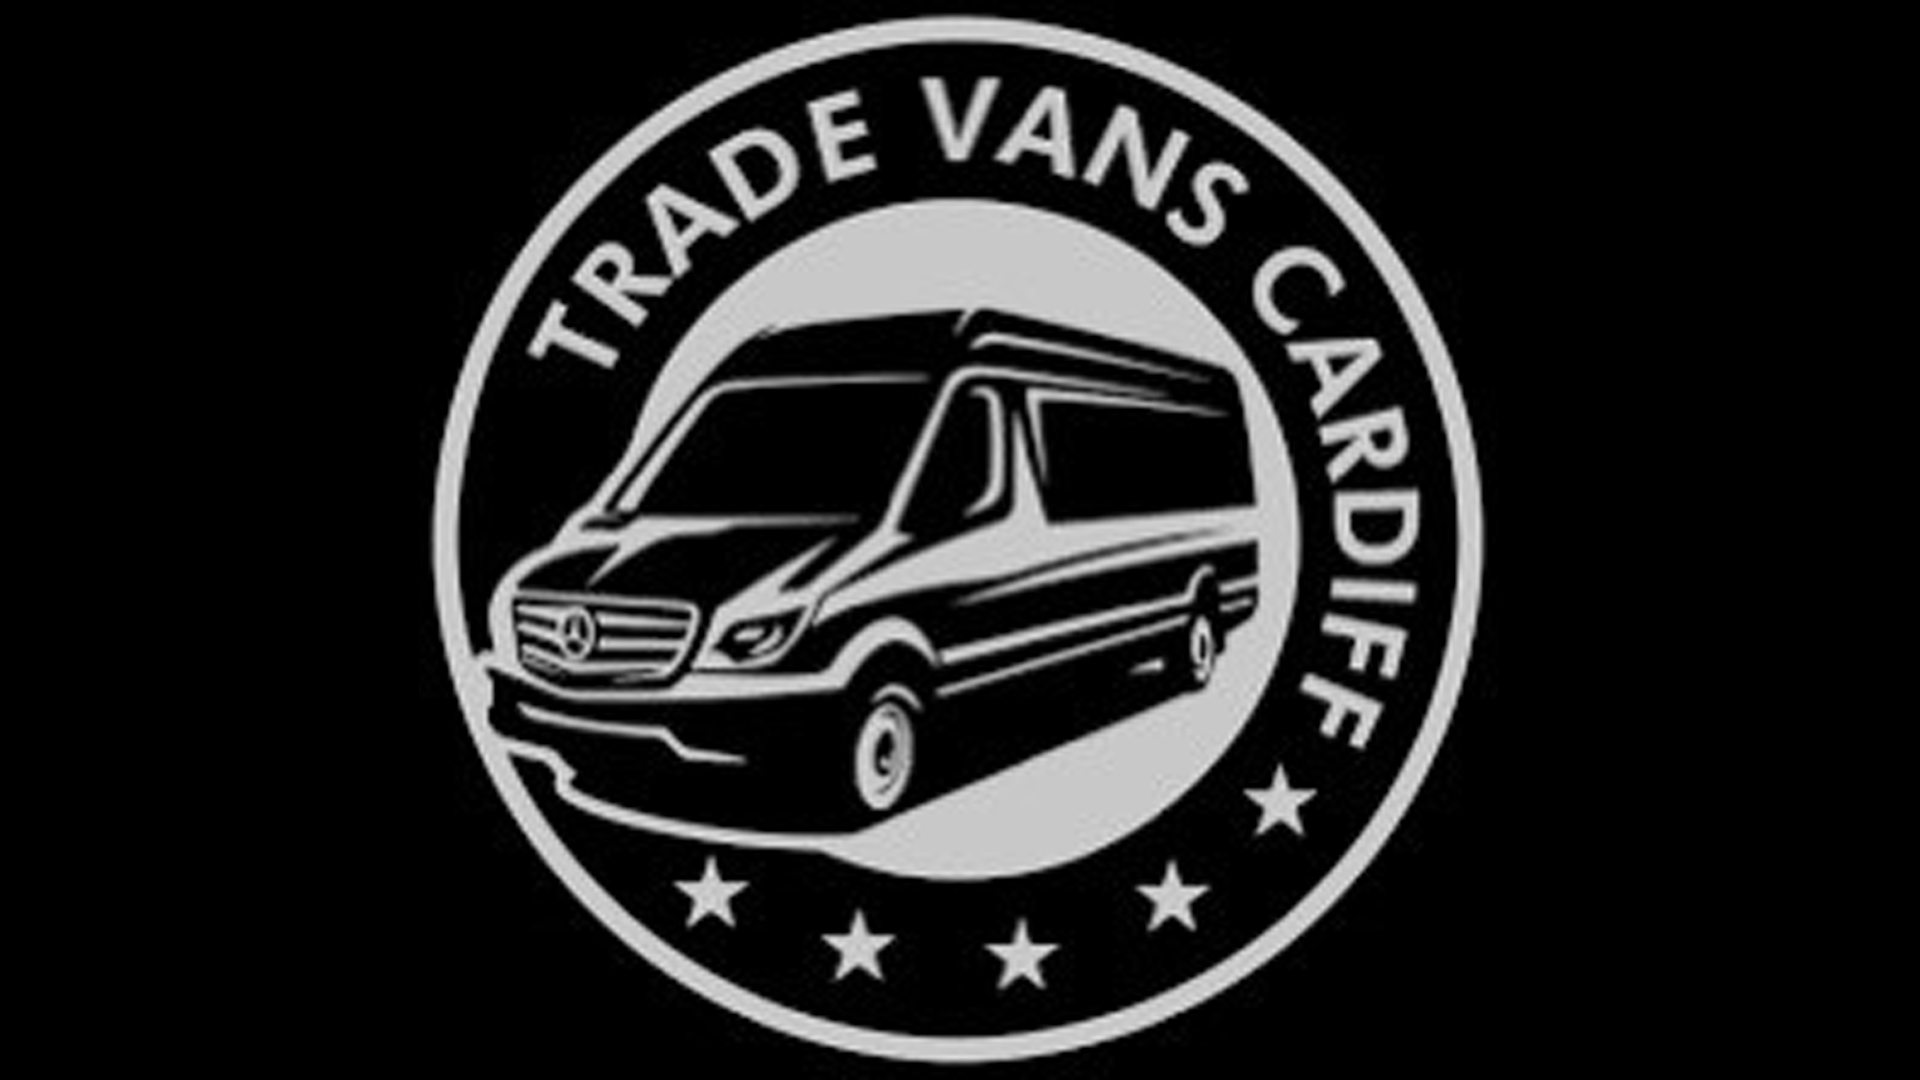 Trade Vans Cardiff